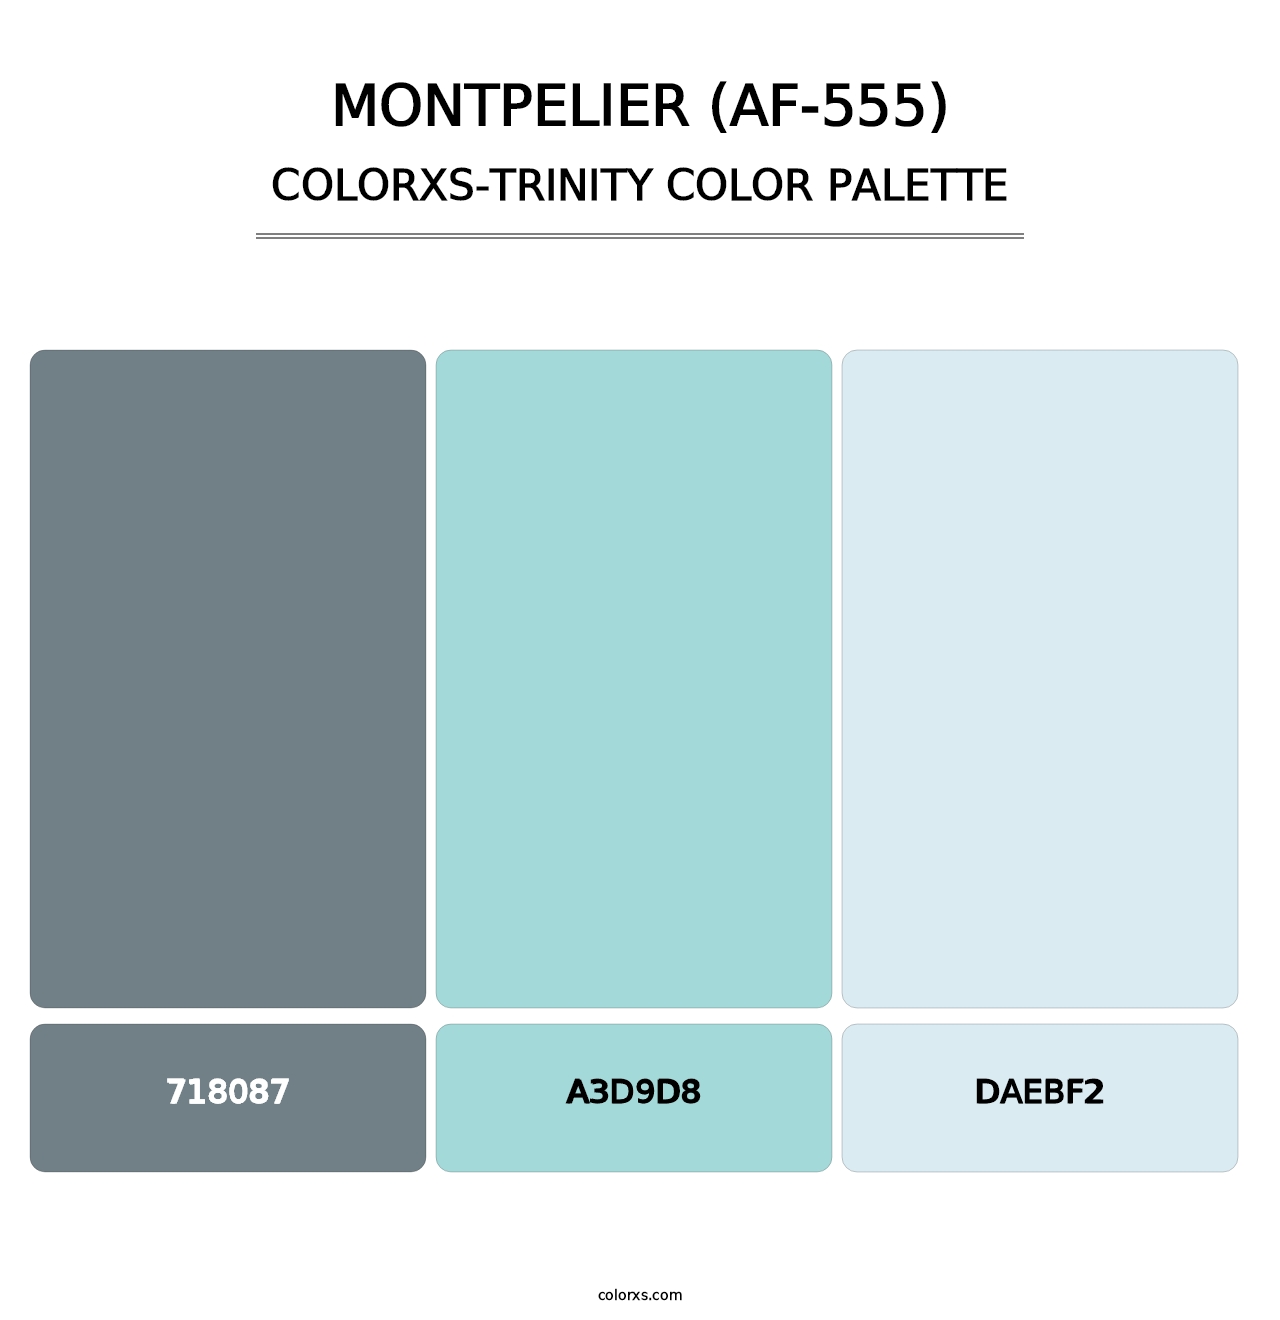 Montpelier (AF-555) - Colorxs Trinity Palette